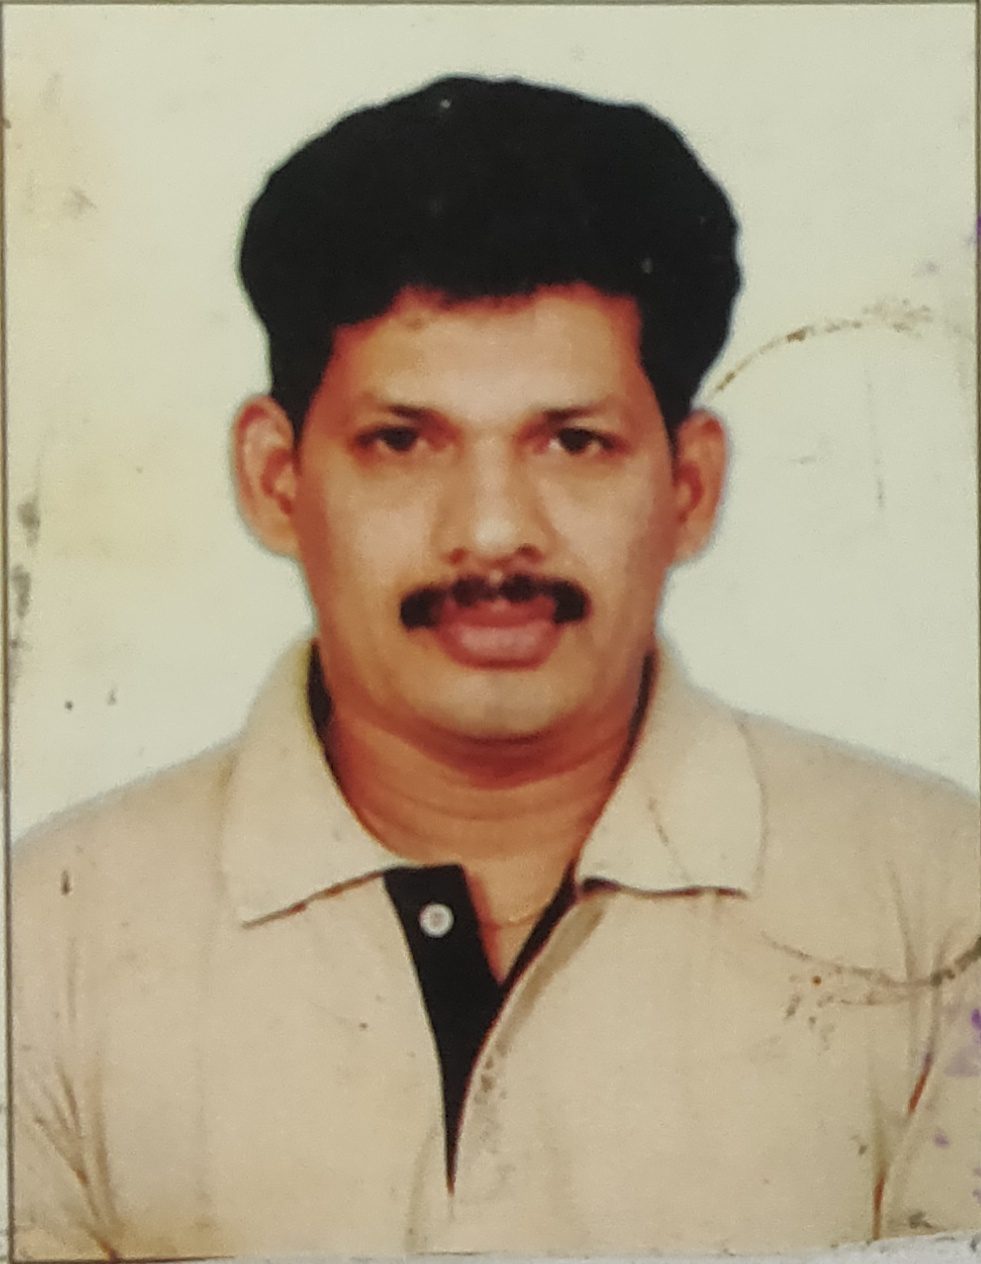 Sri A Anand Kumar